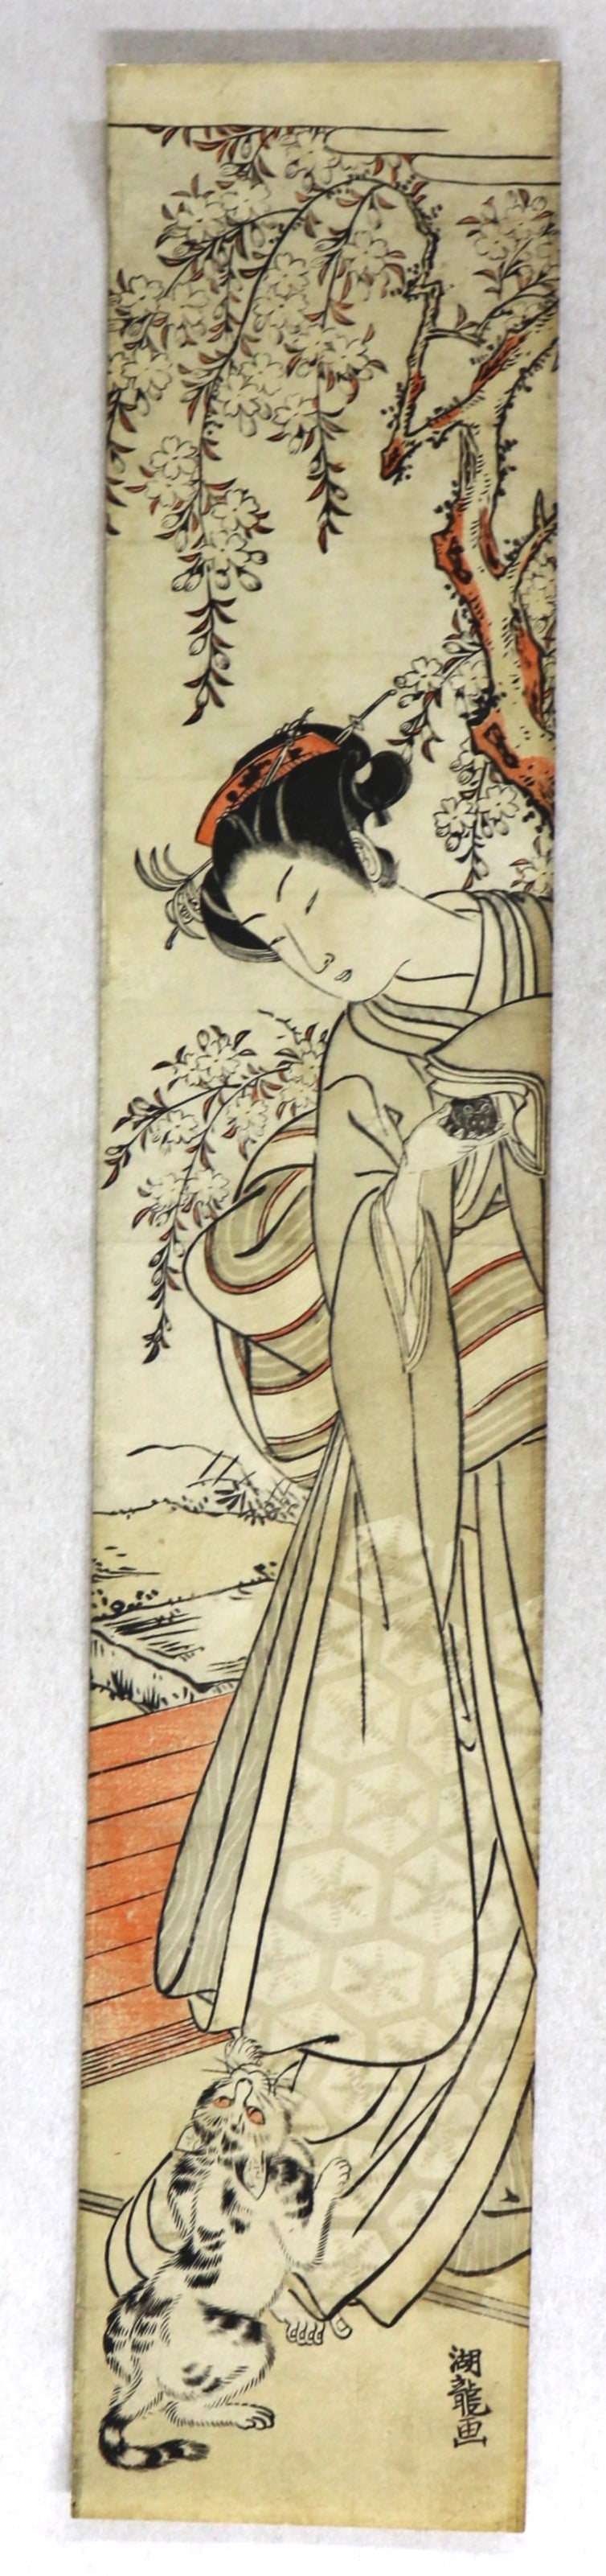 Beauty and Cat by Koryusai / Beauté et chat par Koryusai ( 1770-1780's)